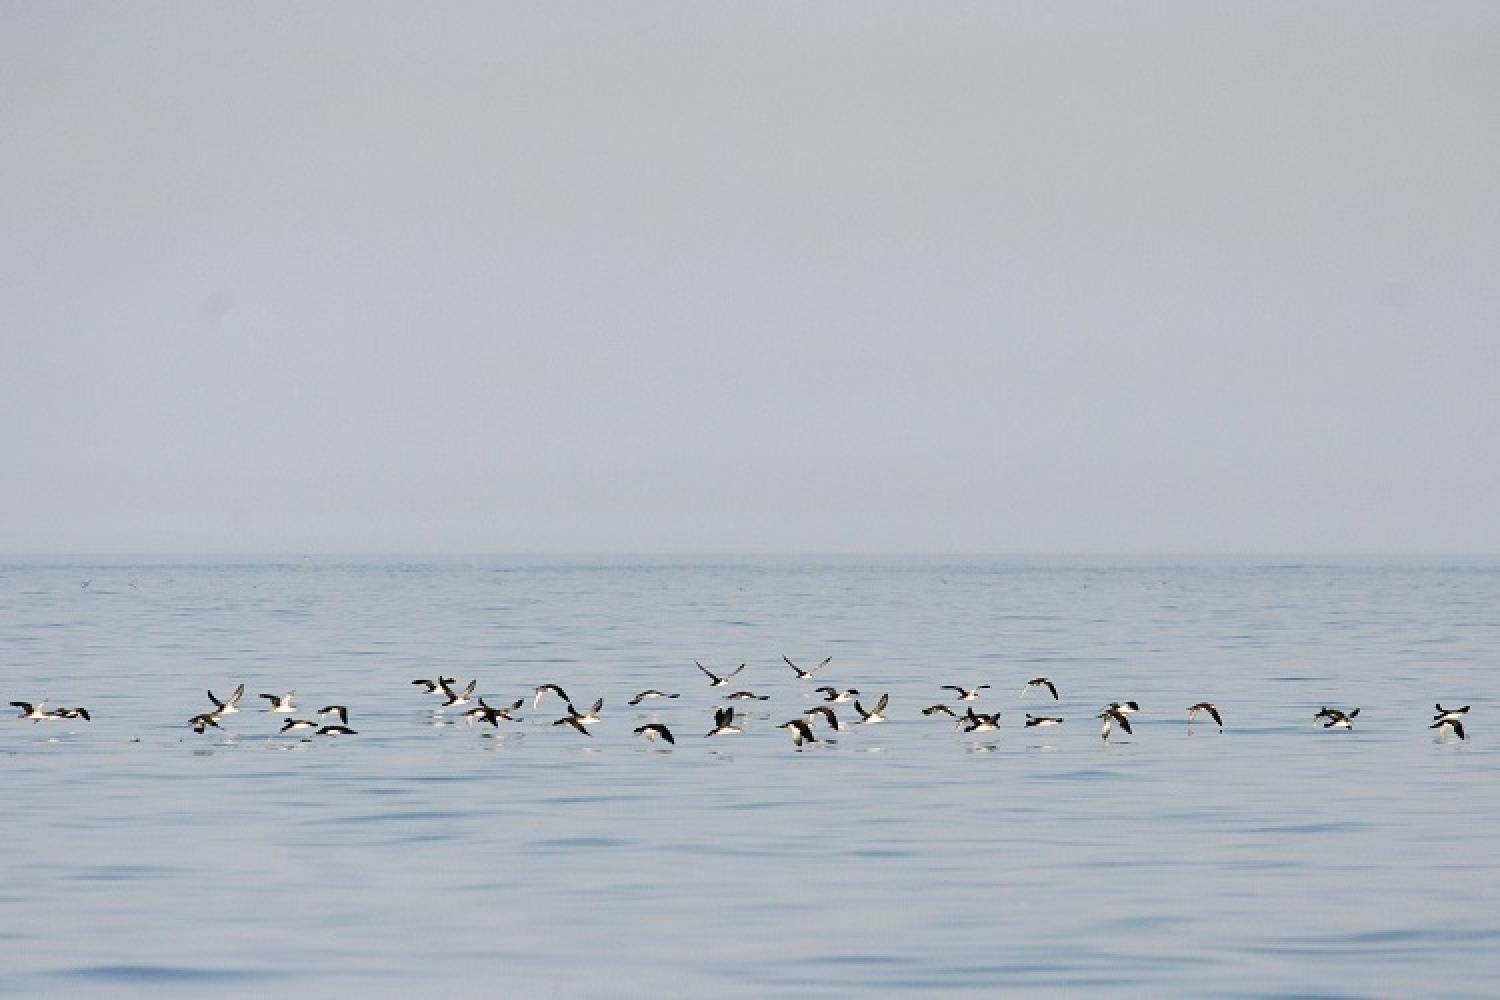 puffin-mediterranee-2-n-bazin-parc-national-calanques-marseille-cassis-la-ciotat.jpg